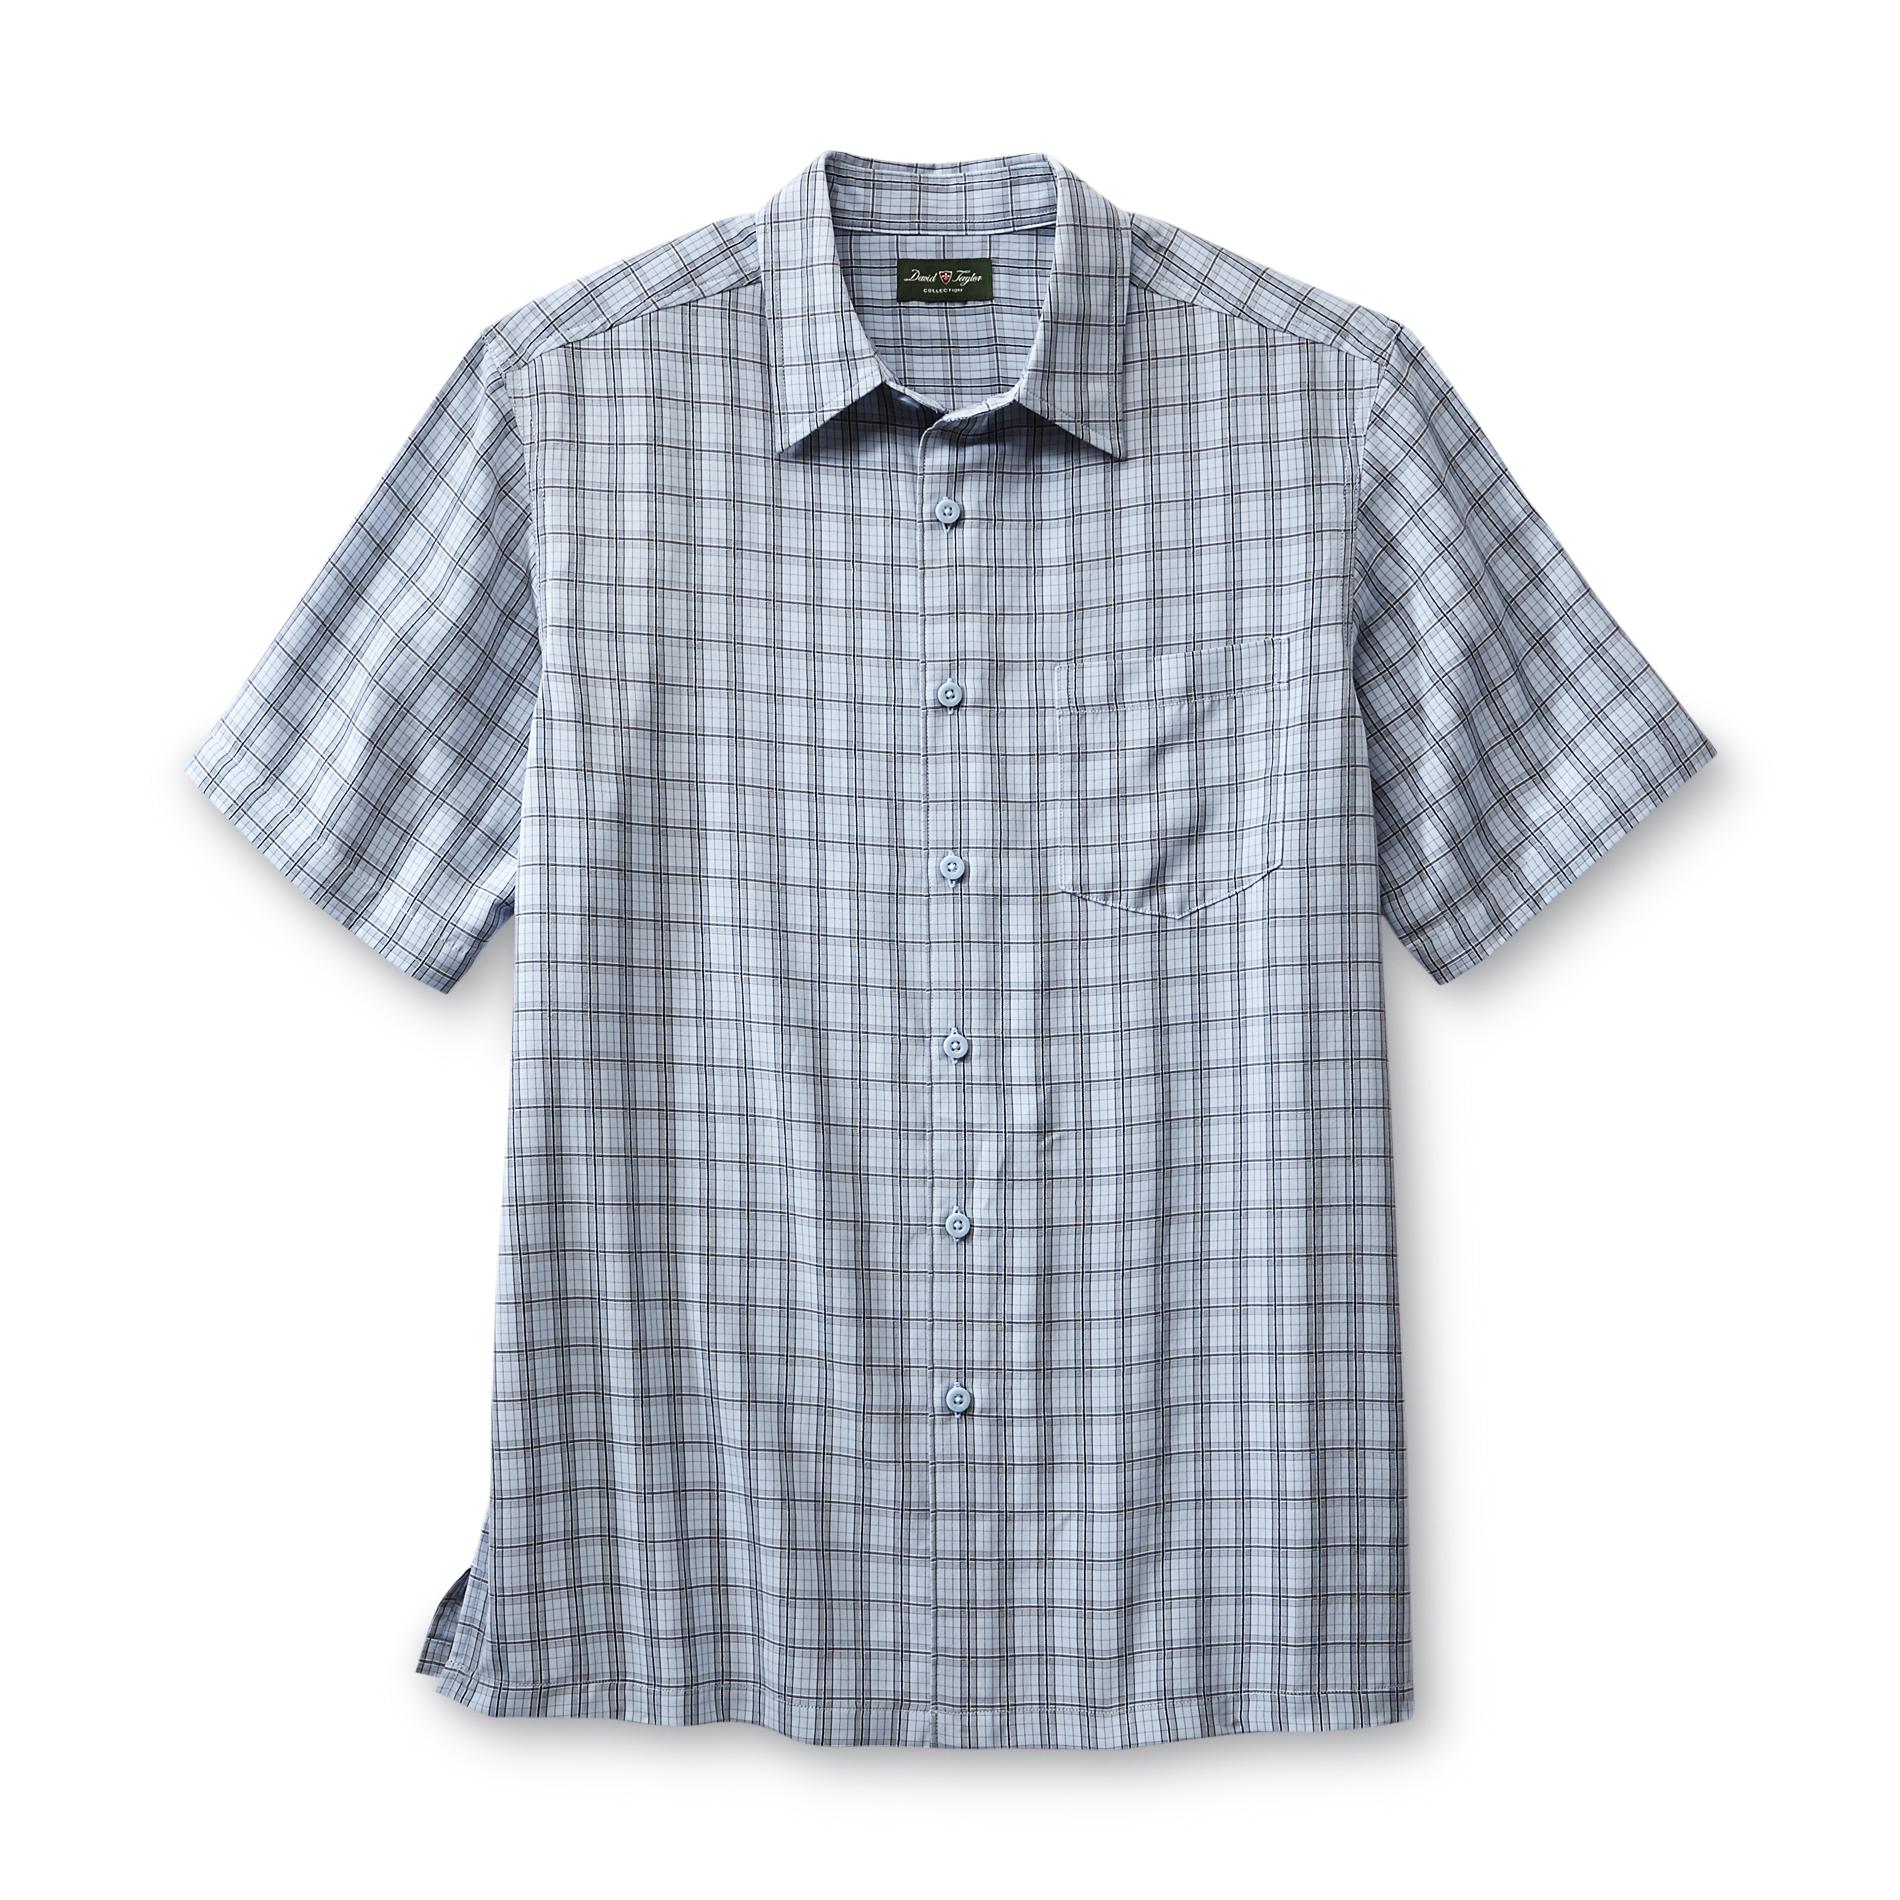 David Taylor Collection Men's Short-Sleeve Dress Shirt - Plaid